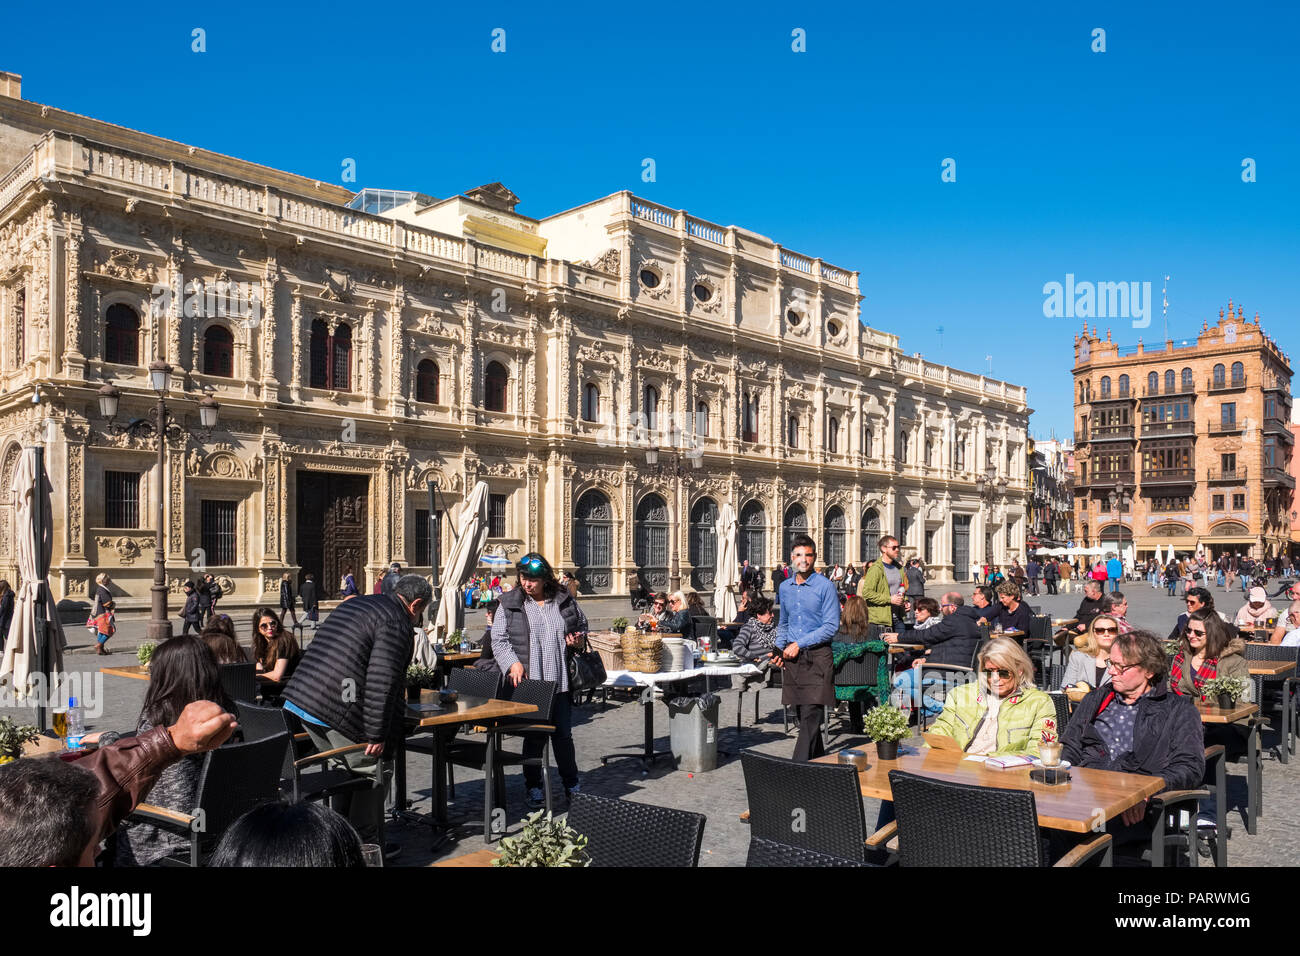 Plaza De San Francisco, Seville, Spain, Europe, pavement cafe Stock Photo